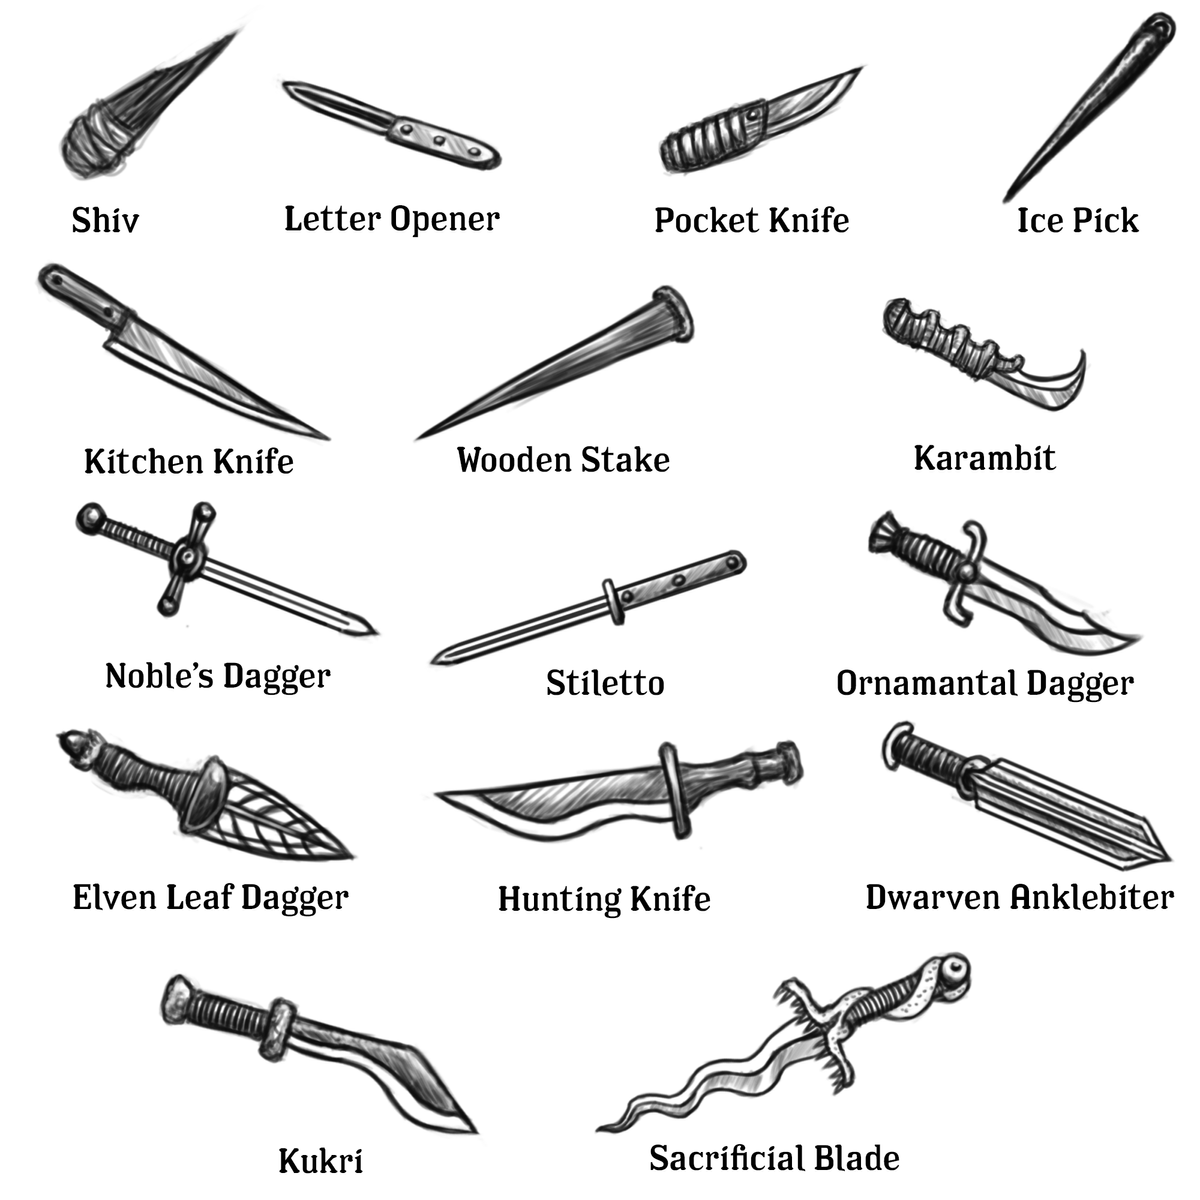 Iron Age - Knives